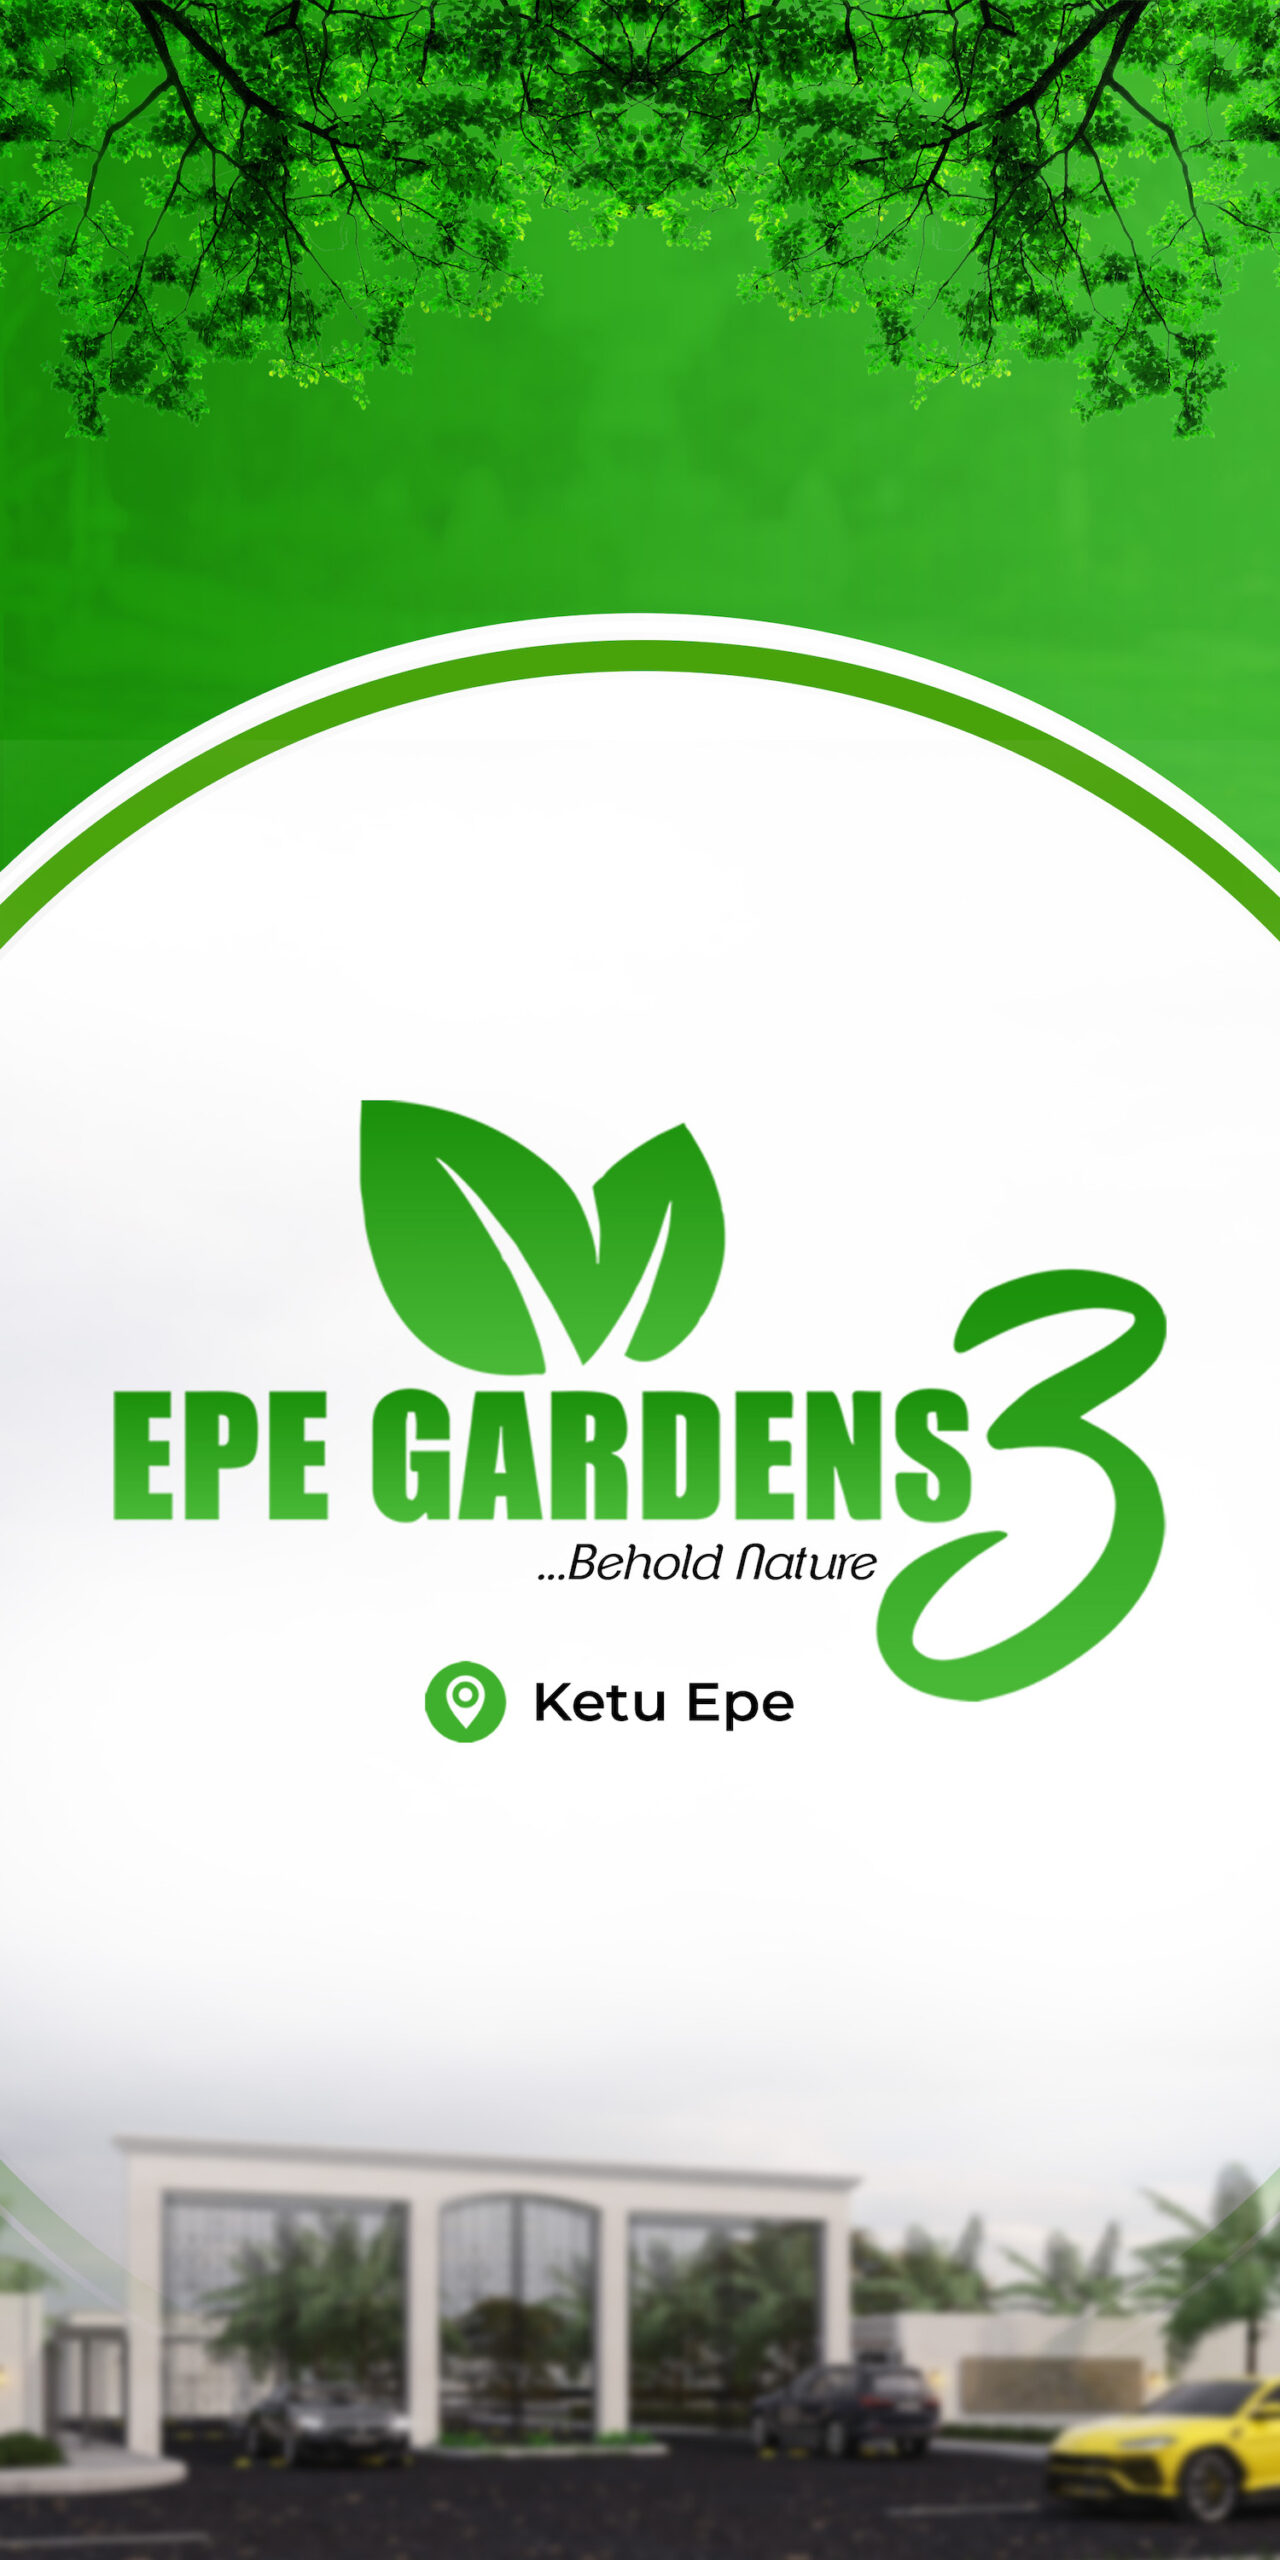 Epe gardens 3